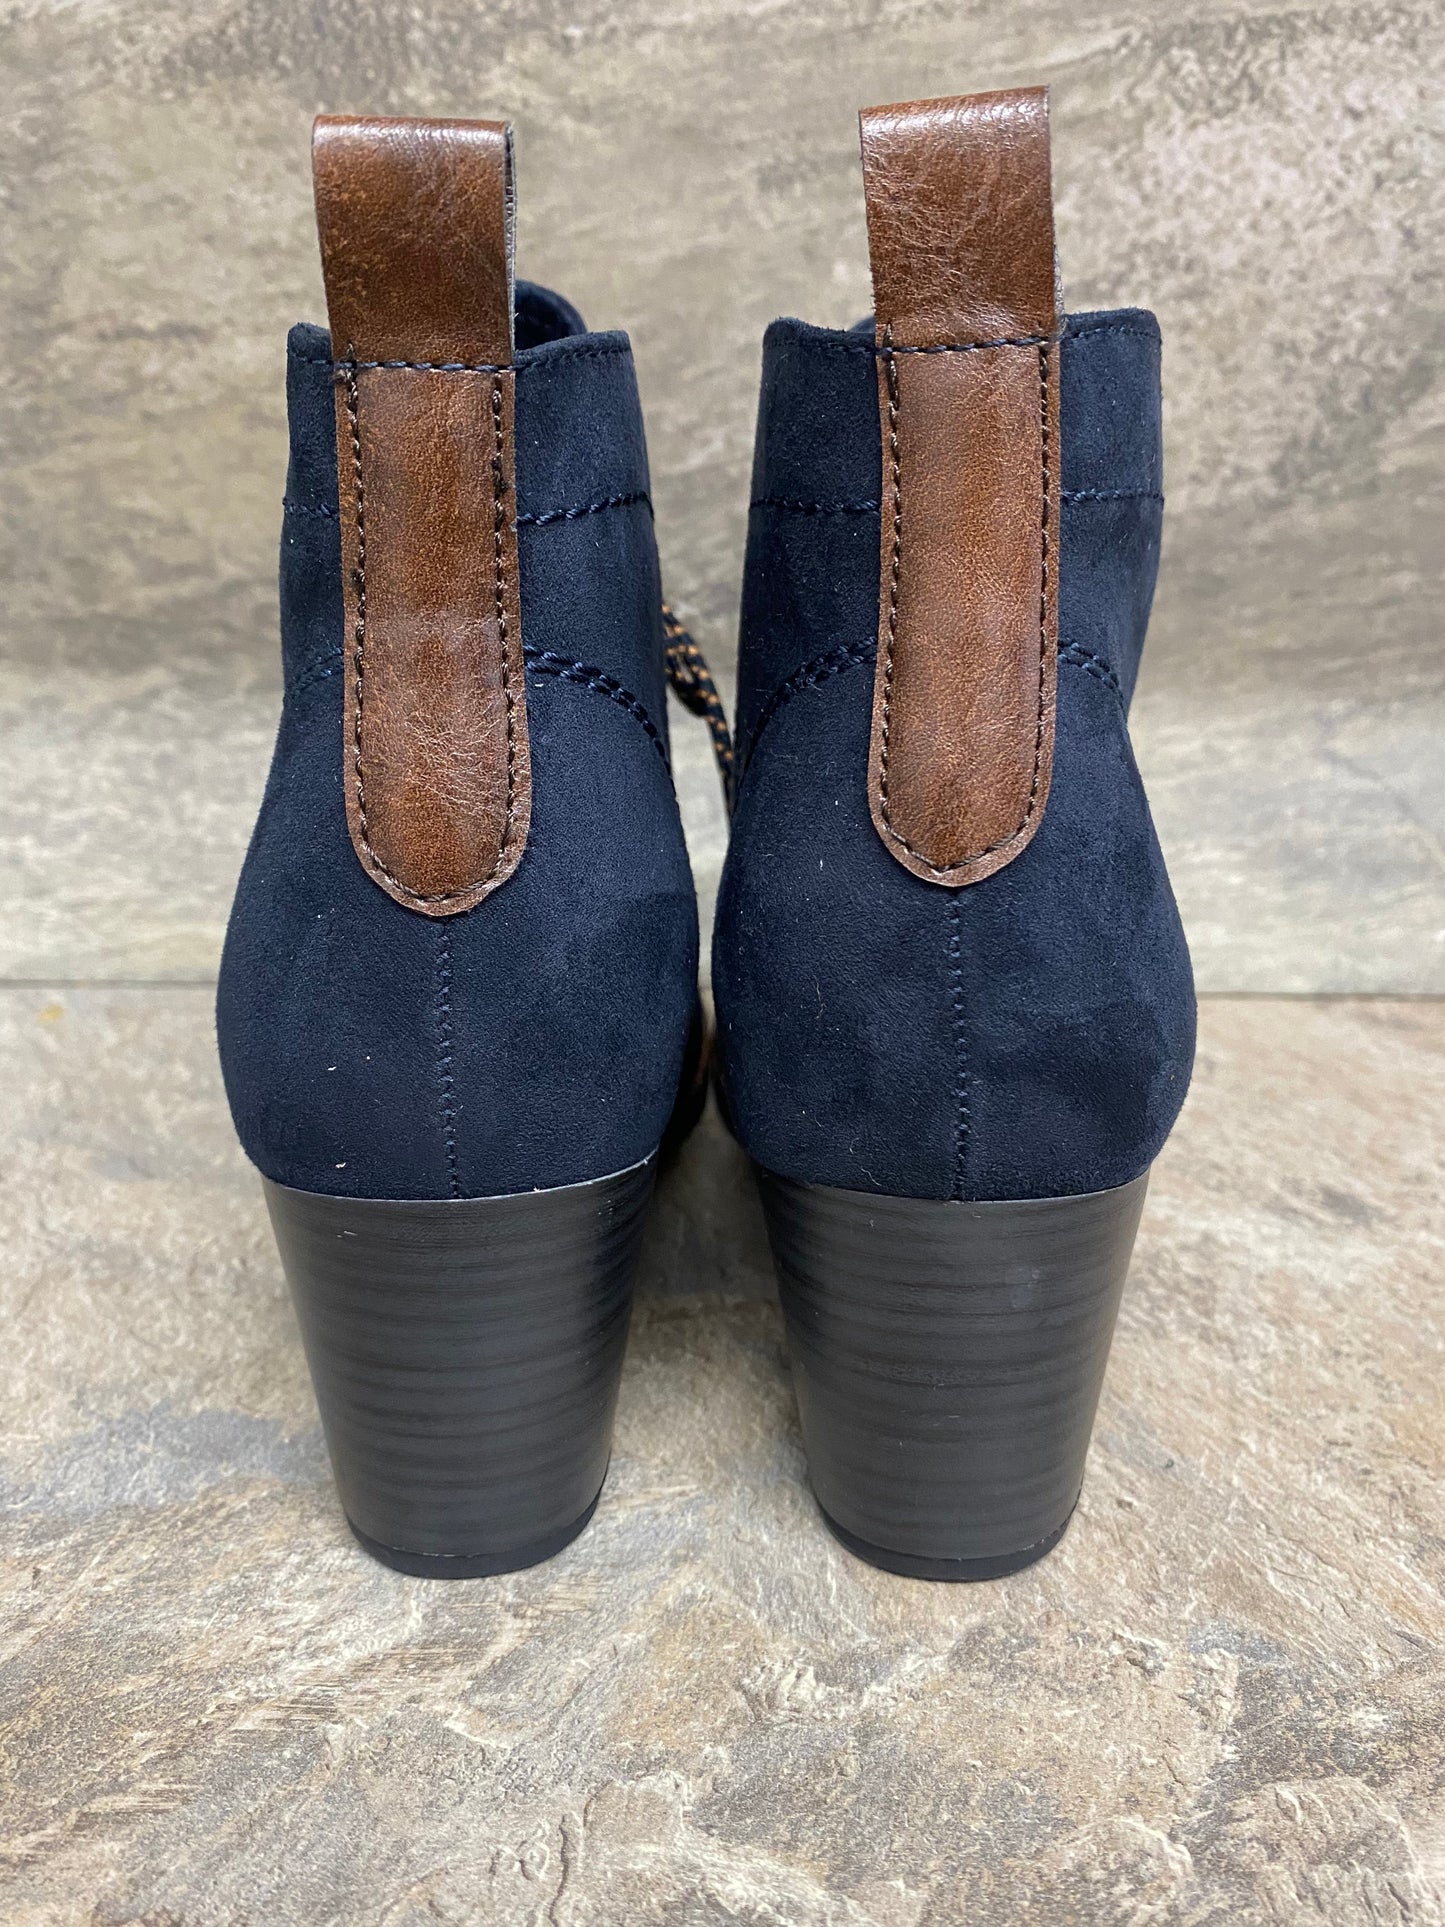 Marco Tozzi navy heeled lace up boot sizes 4-9